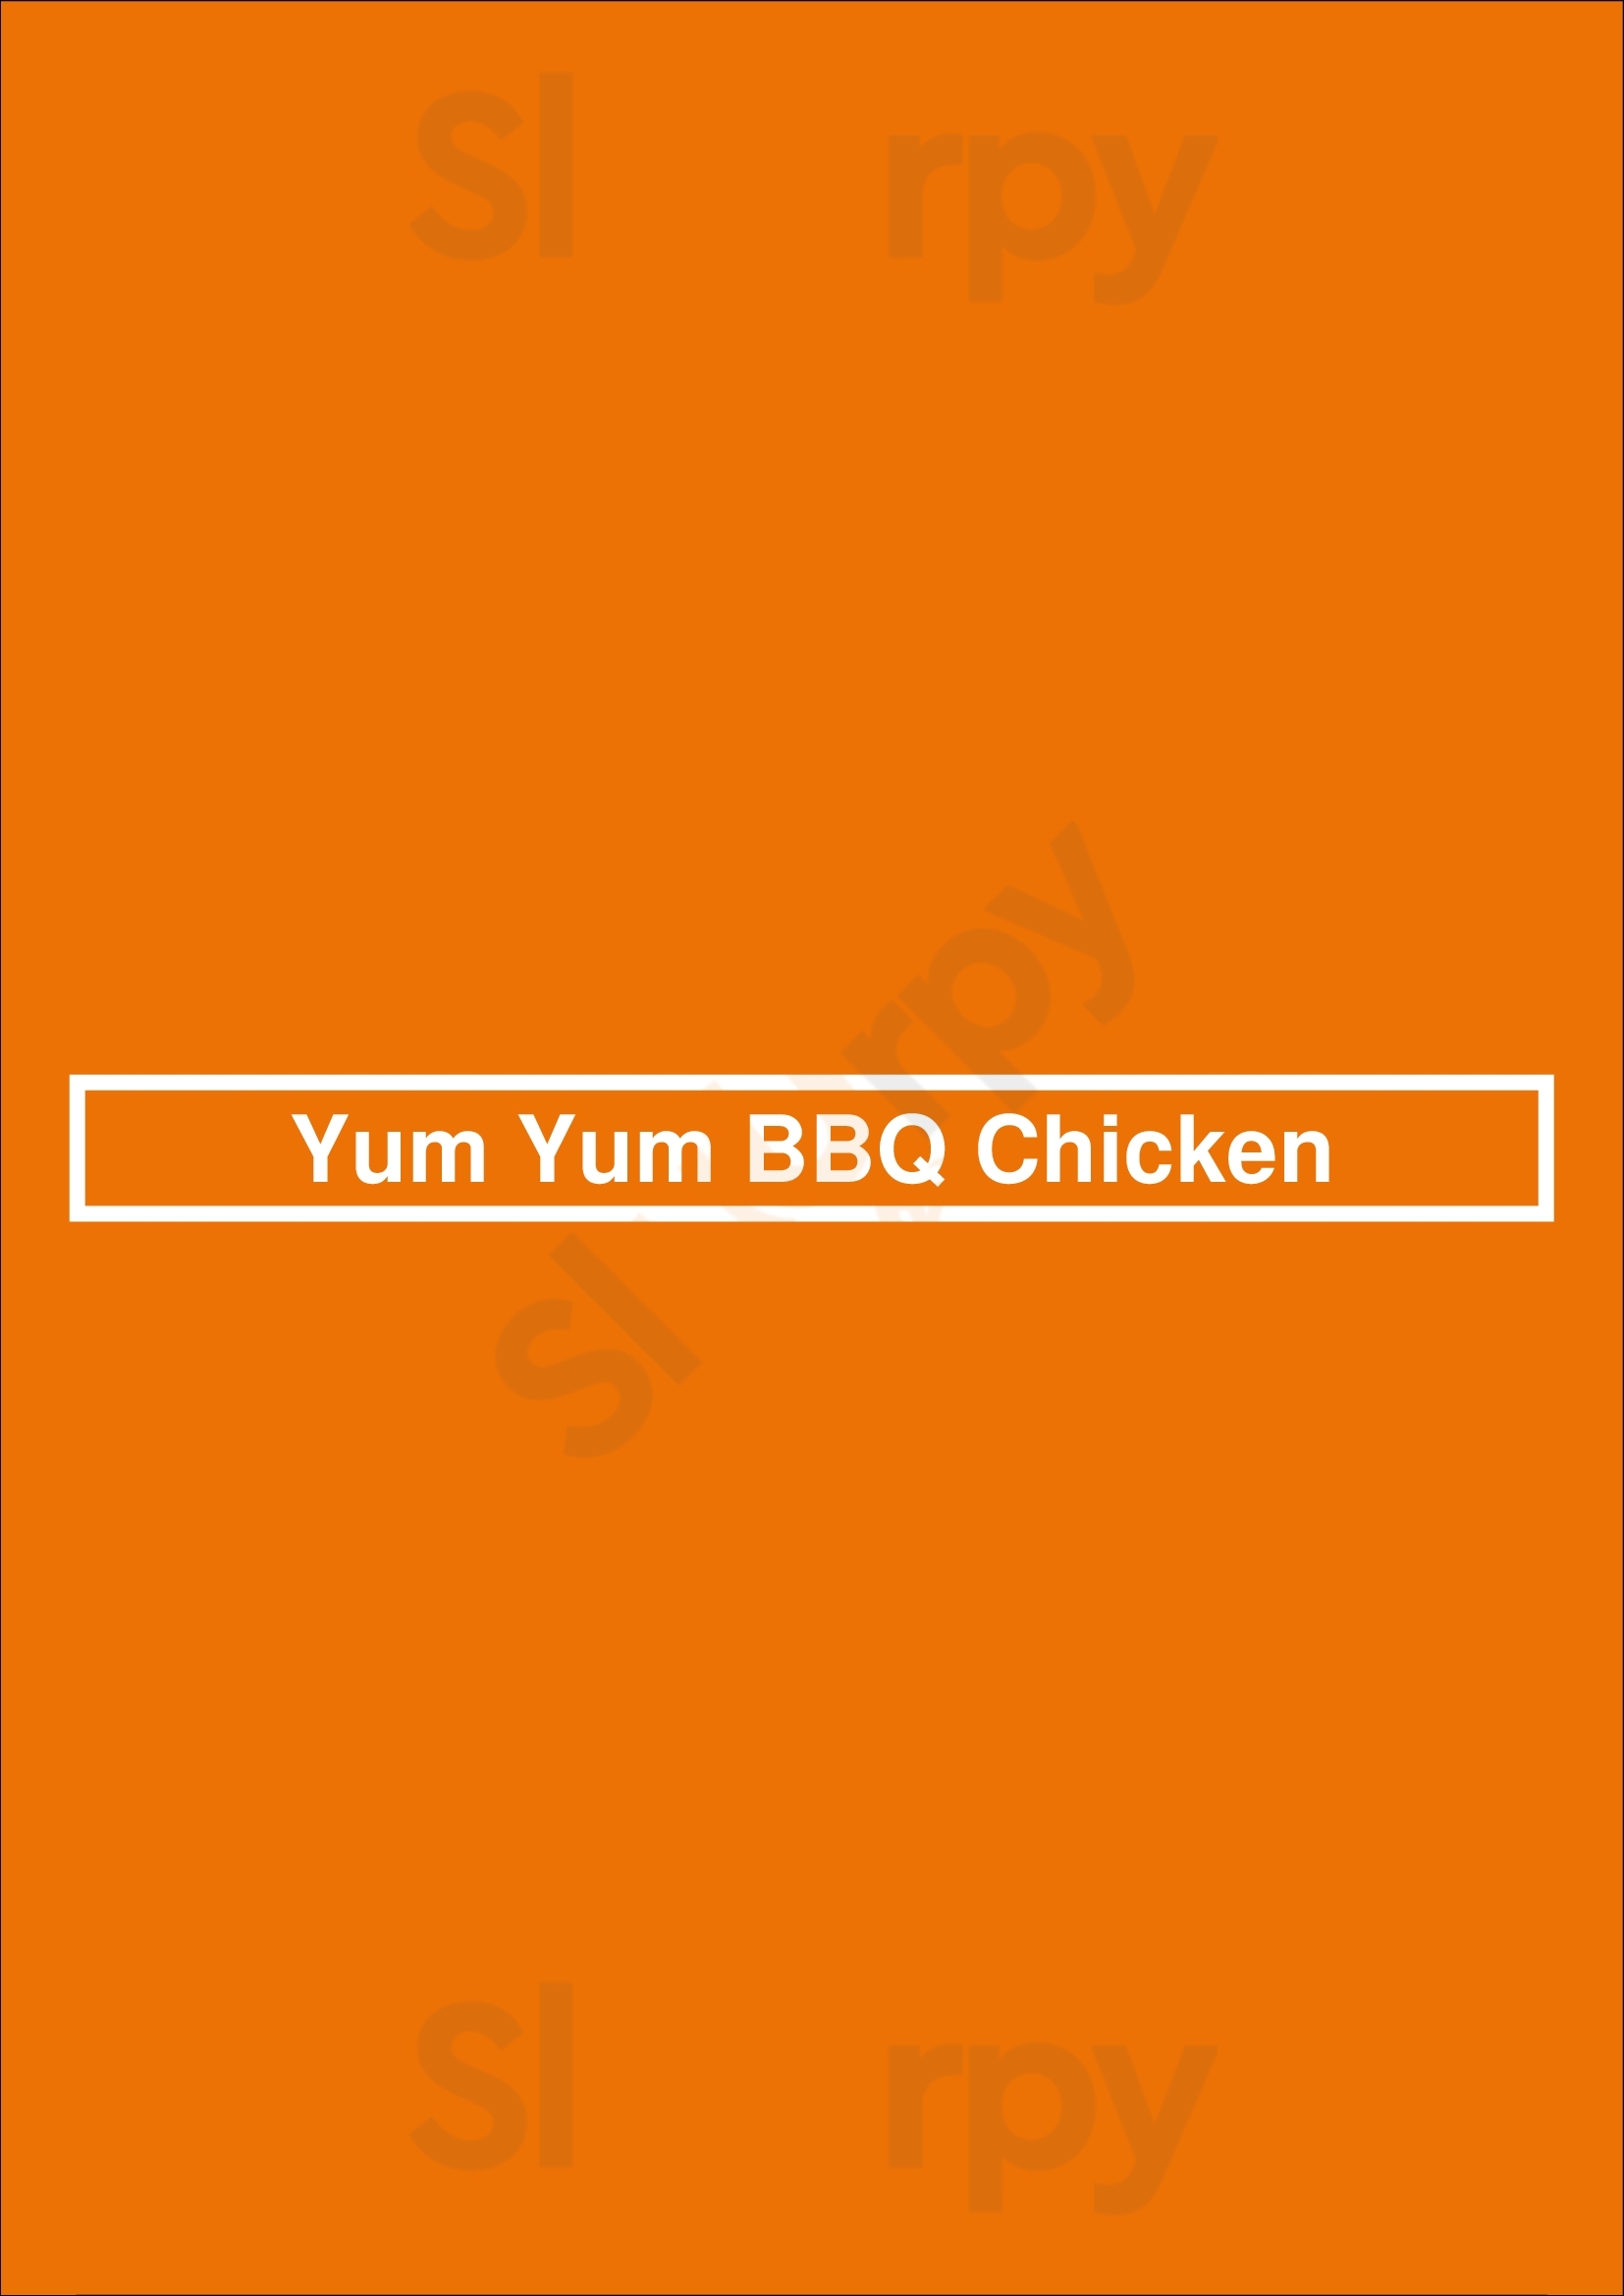 Yum Yum Bbq Chicken Calgary Menu - 1